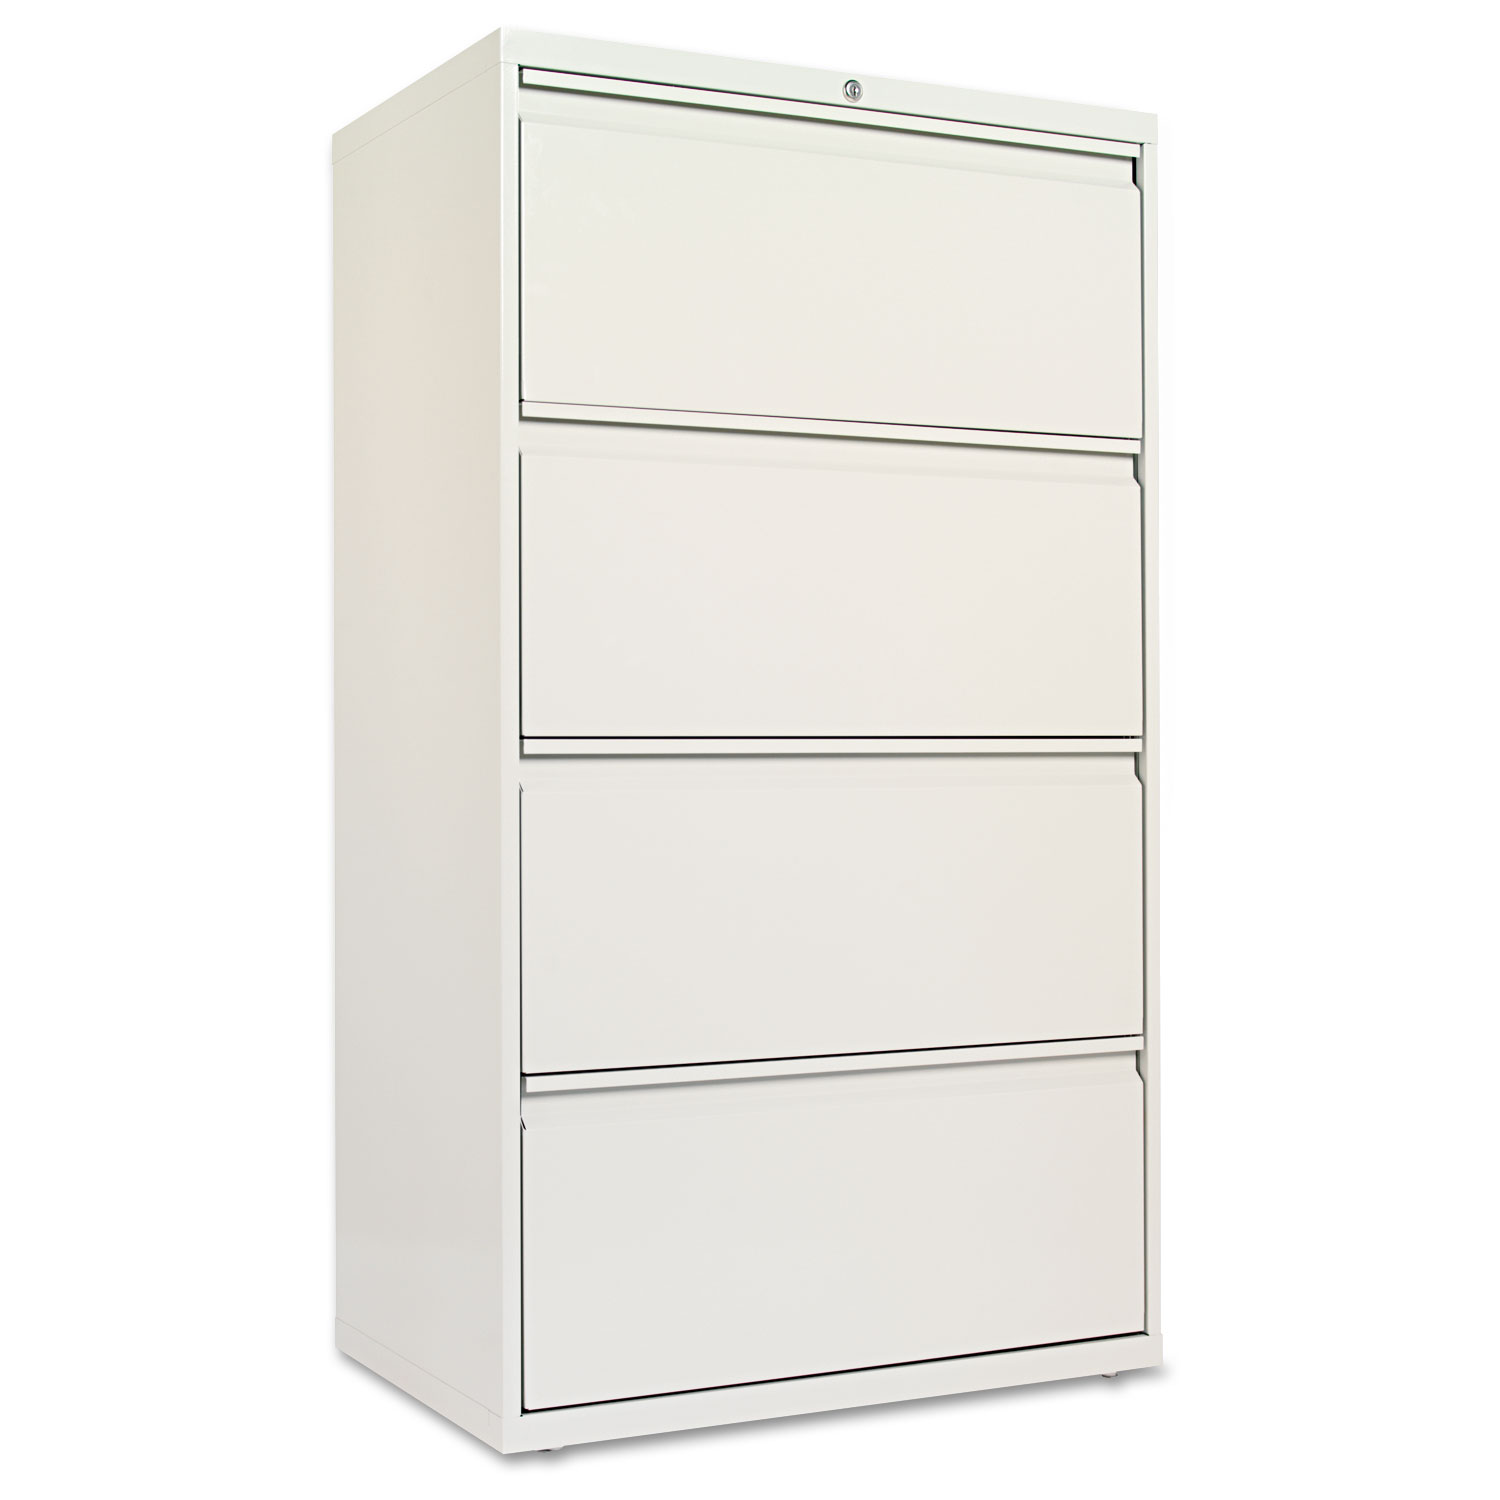  Alera ALELF3054LG Four-Drawer Lateral File Cabinet, 30w x 18d x 52.5h, Light Gray (ALELF3054LG) 